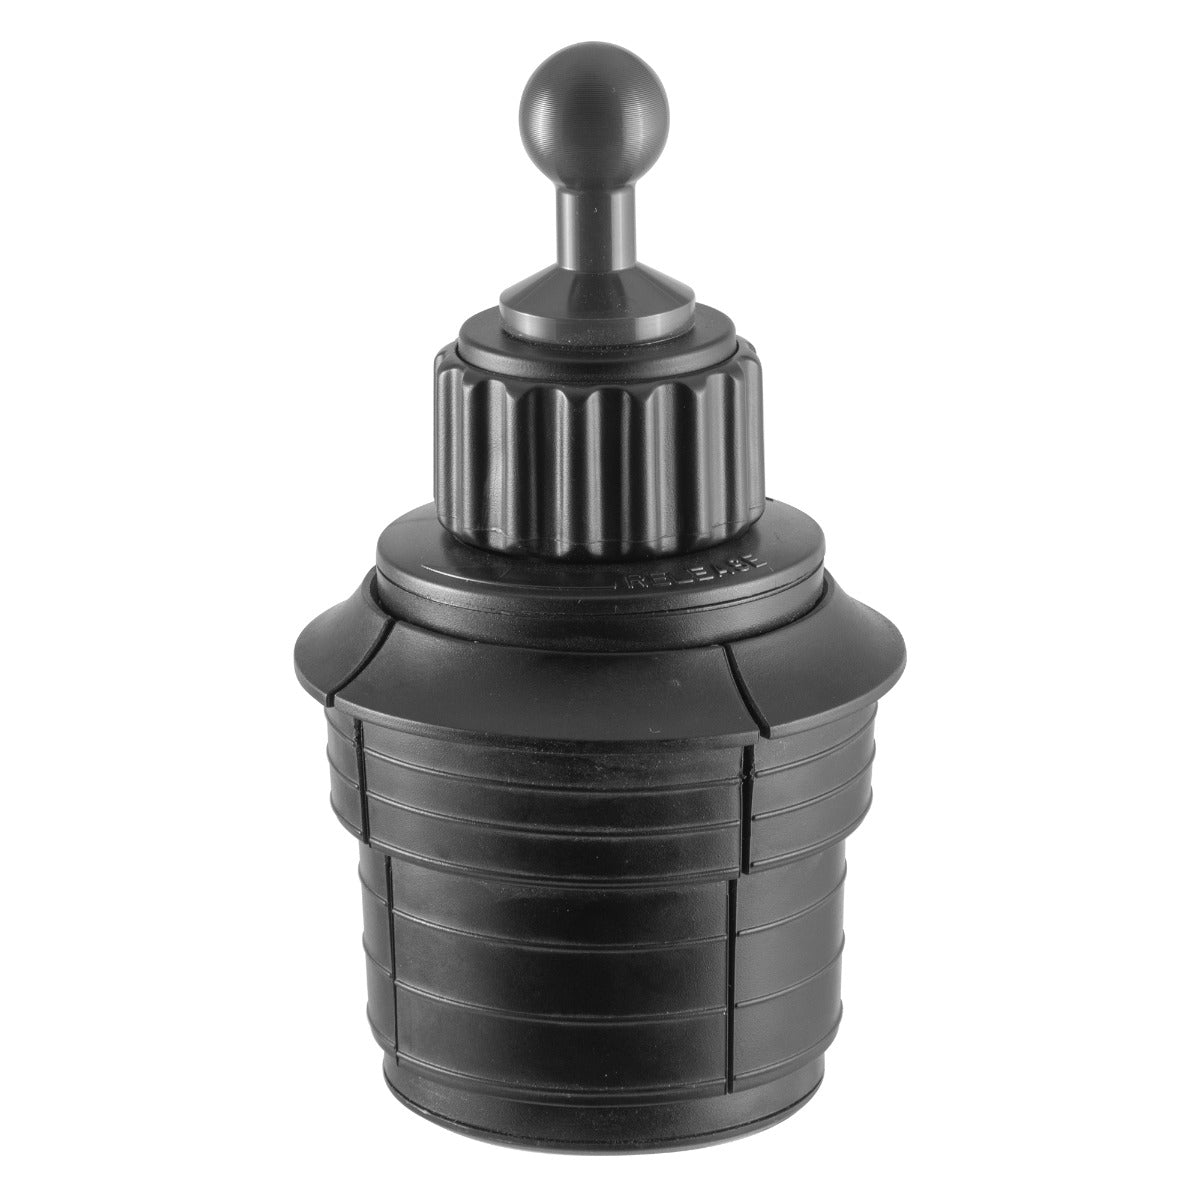 iBOLT™ 20mm Adjustable Aluminum Ball Cup Holder Mount